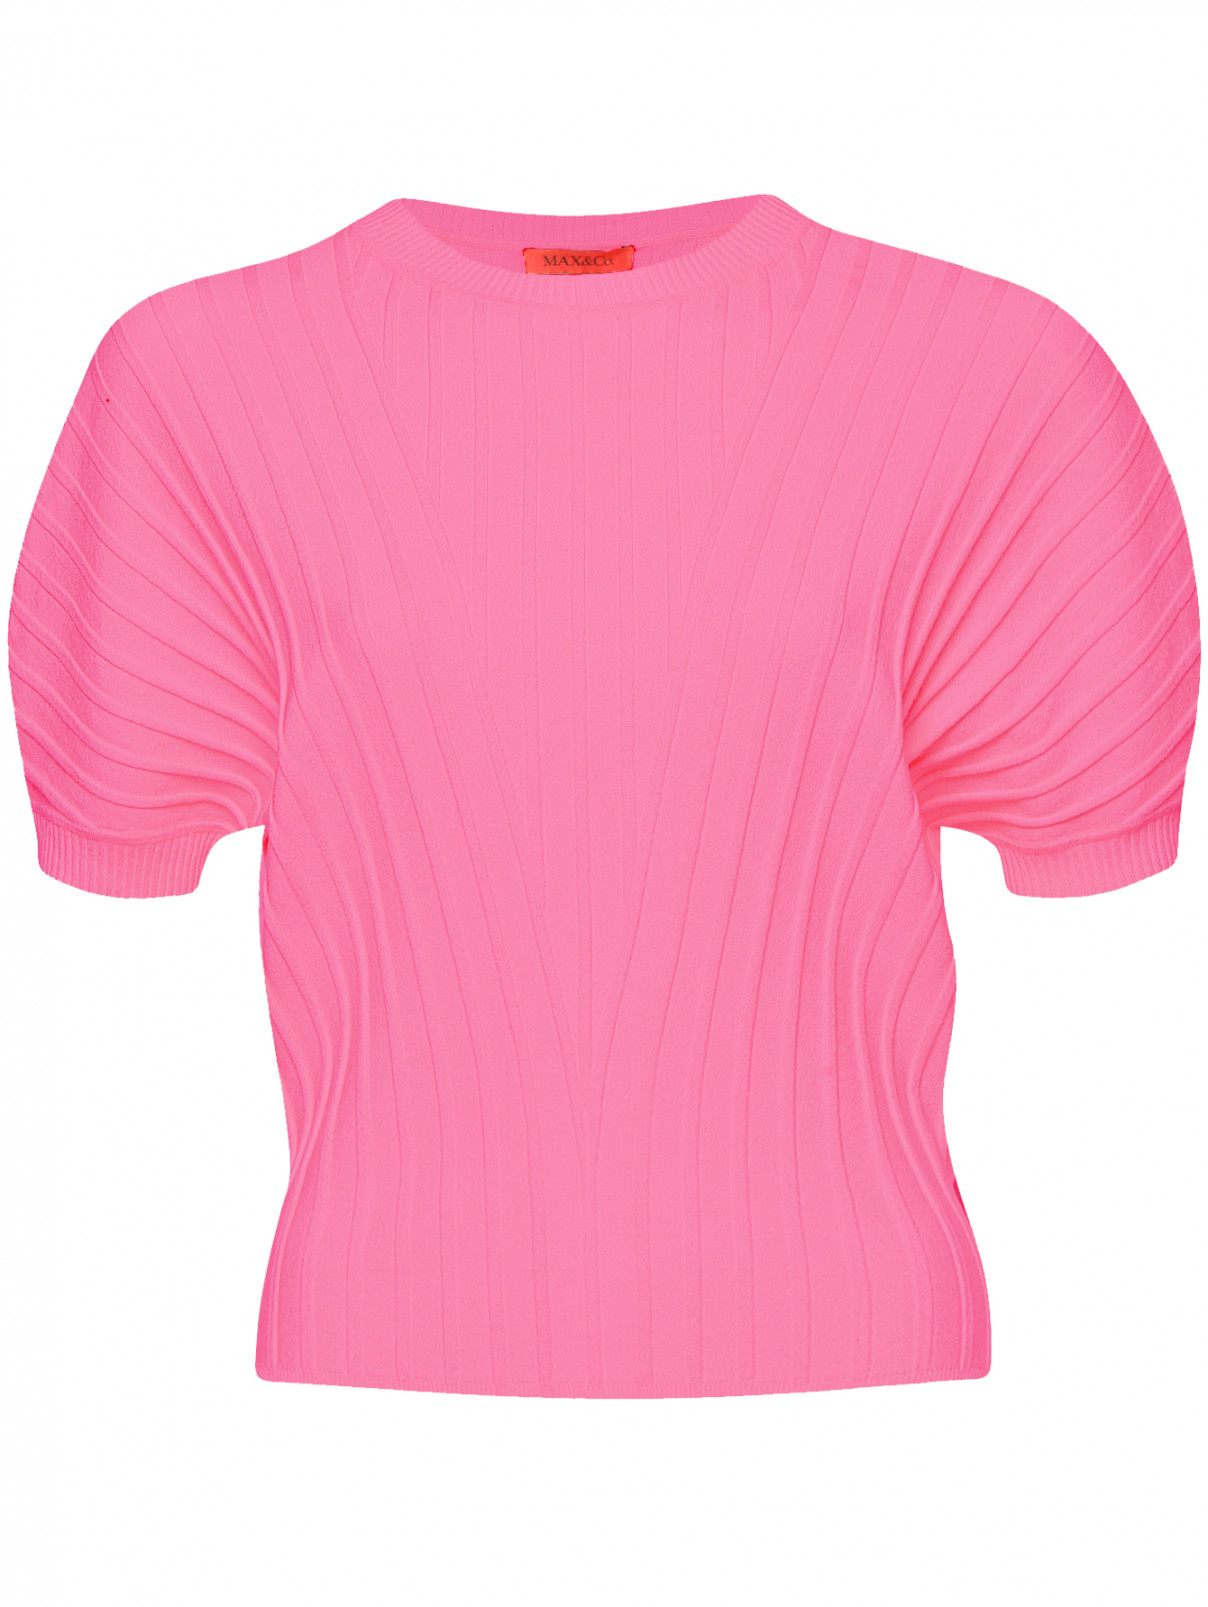 Джемпер с короткими рукавами Max&Co  –  Общий вид  – Цвет:  Розовый